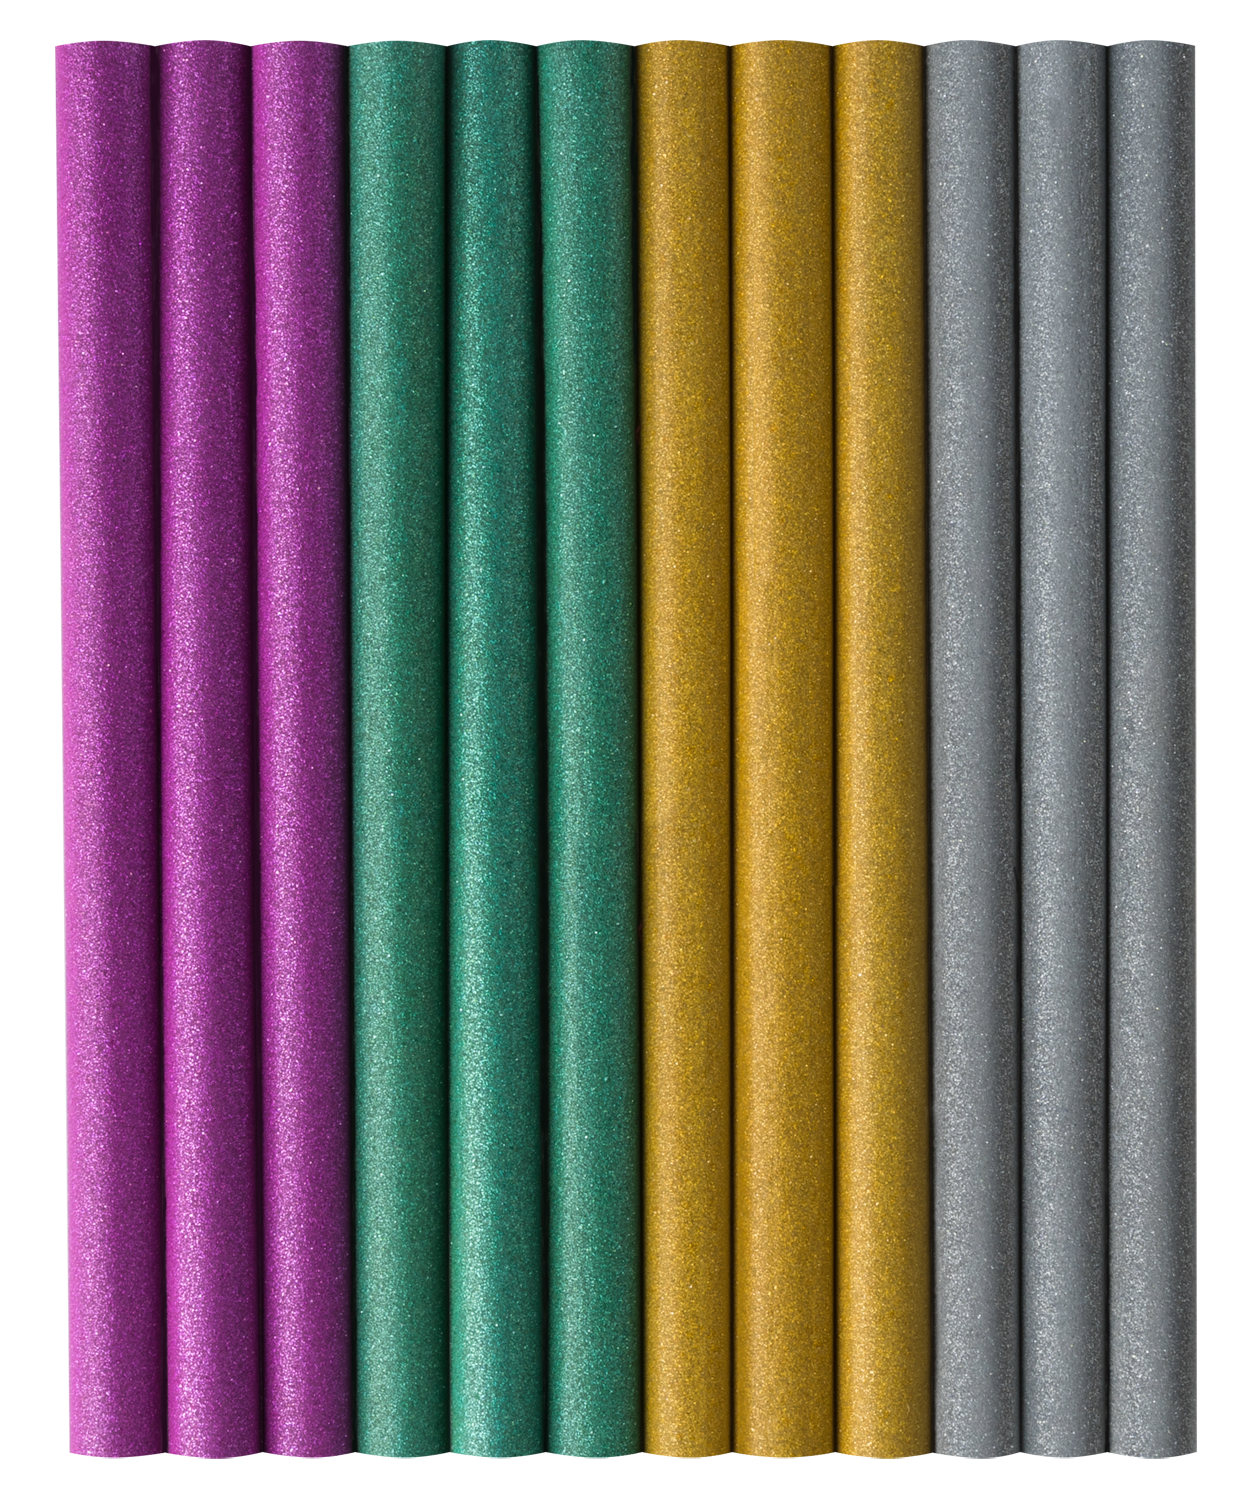 Spoke sticks 36 pieces green/pink/silver/gold reflective